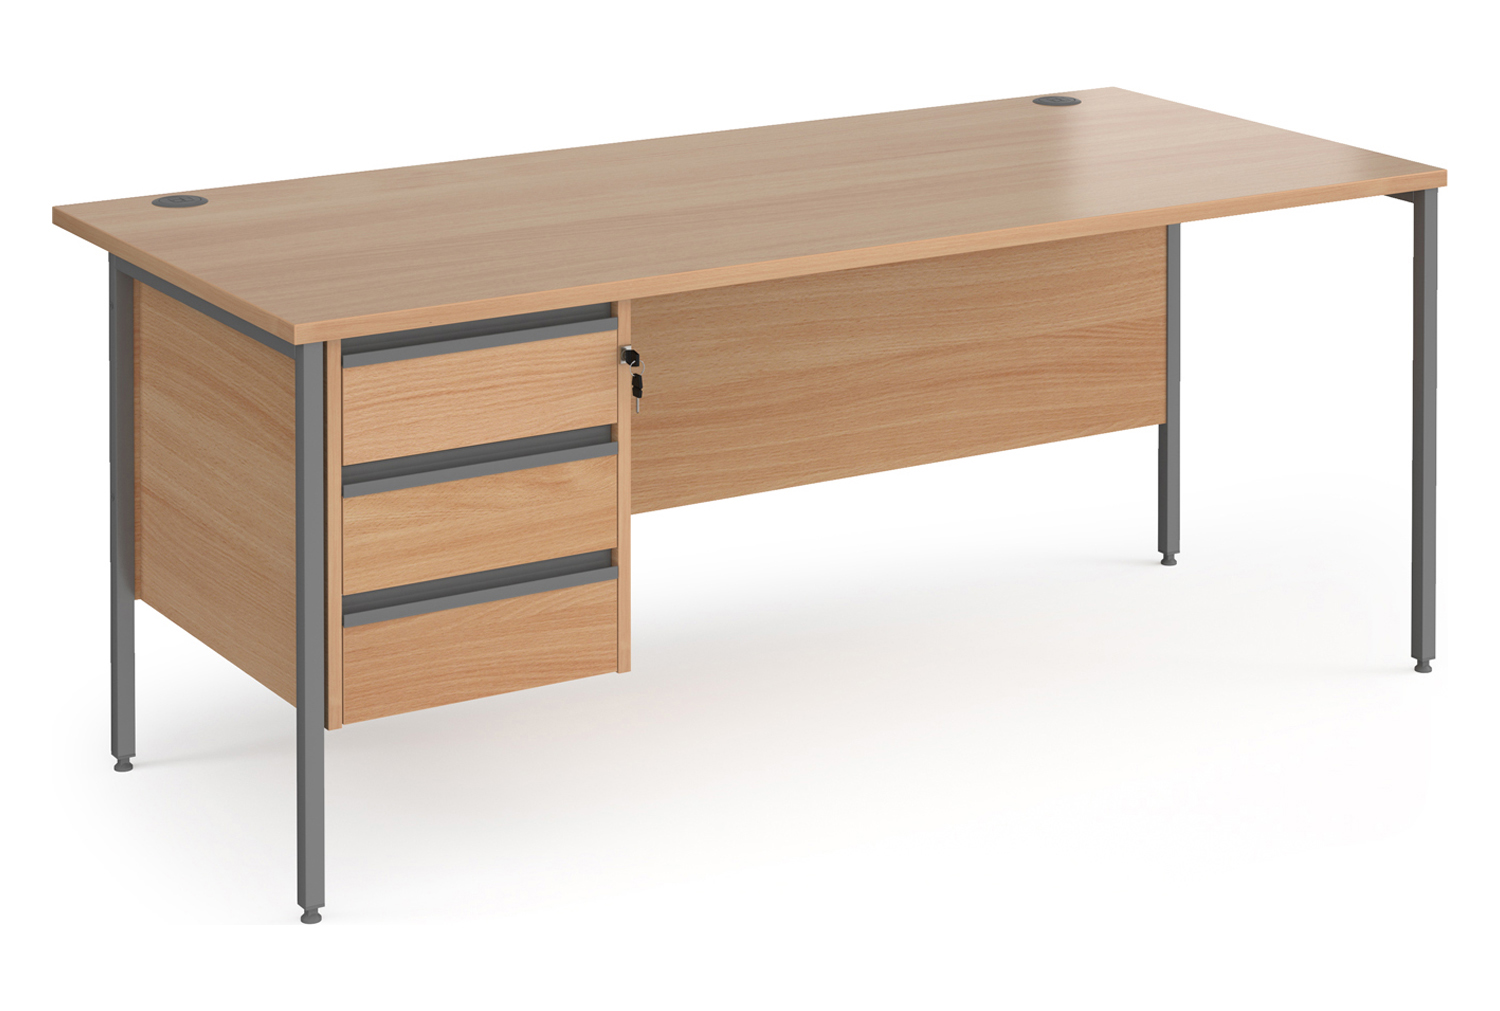 Value Line Classic+ Rectangular H-Leg Office Desk 3 Drawers (Graphite Leg), 180wx80dx73h (cm), Beech